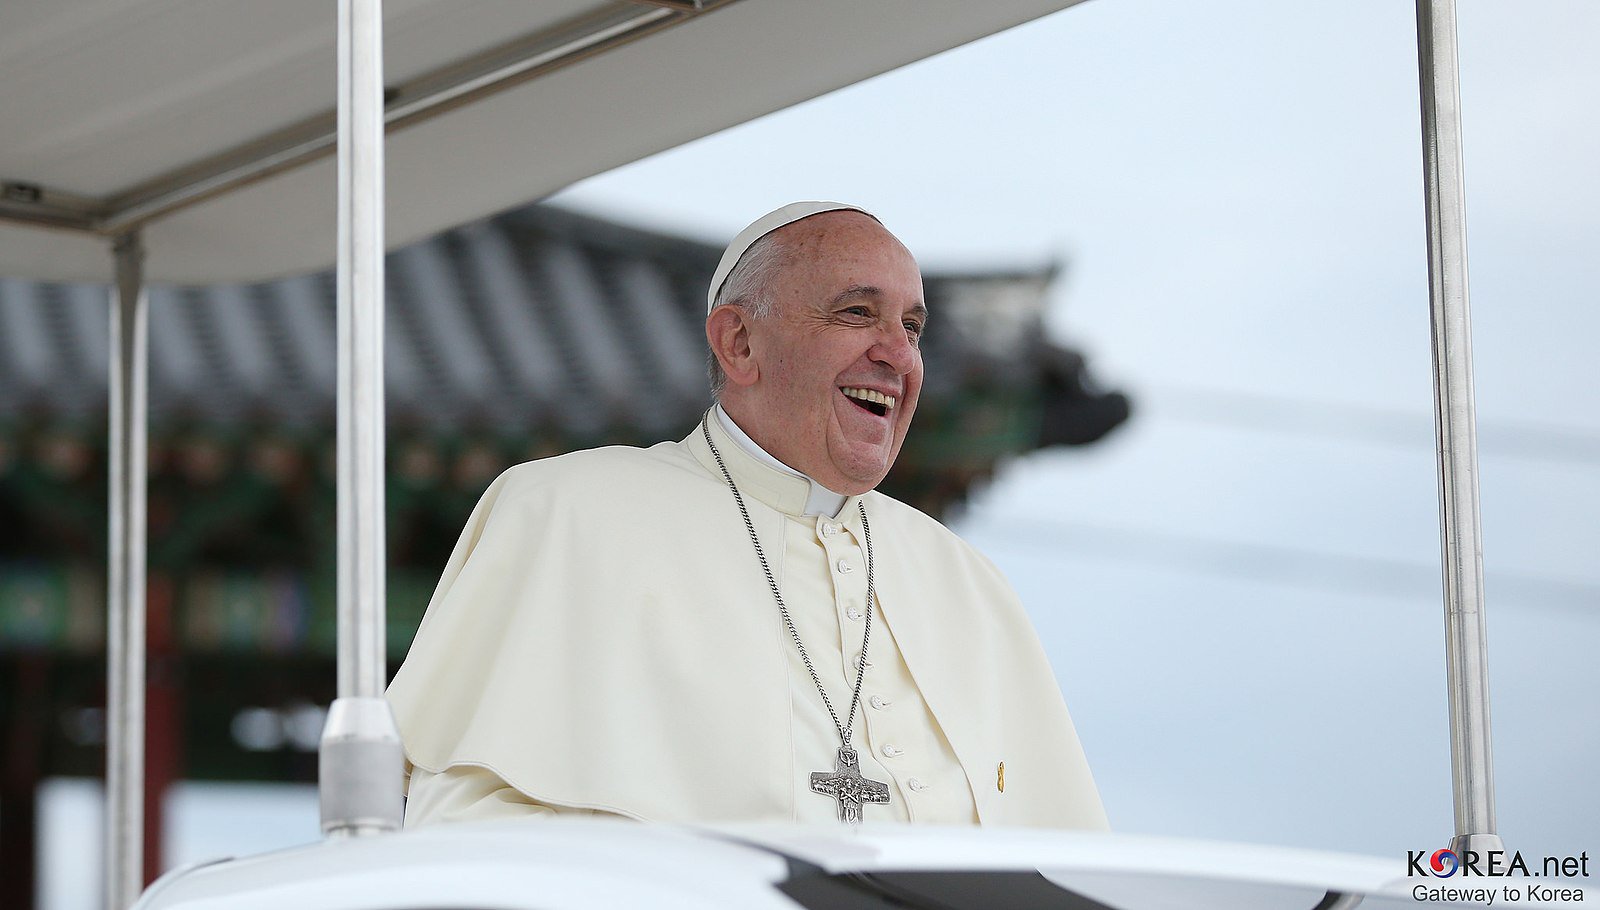 Papst Franziskus feiert 10 Jahre Pontifikat mit Kardinälen und Podcast